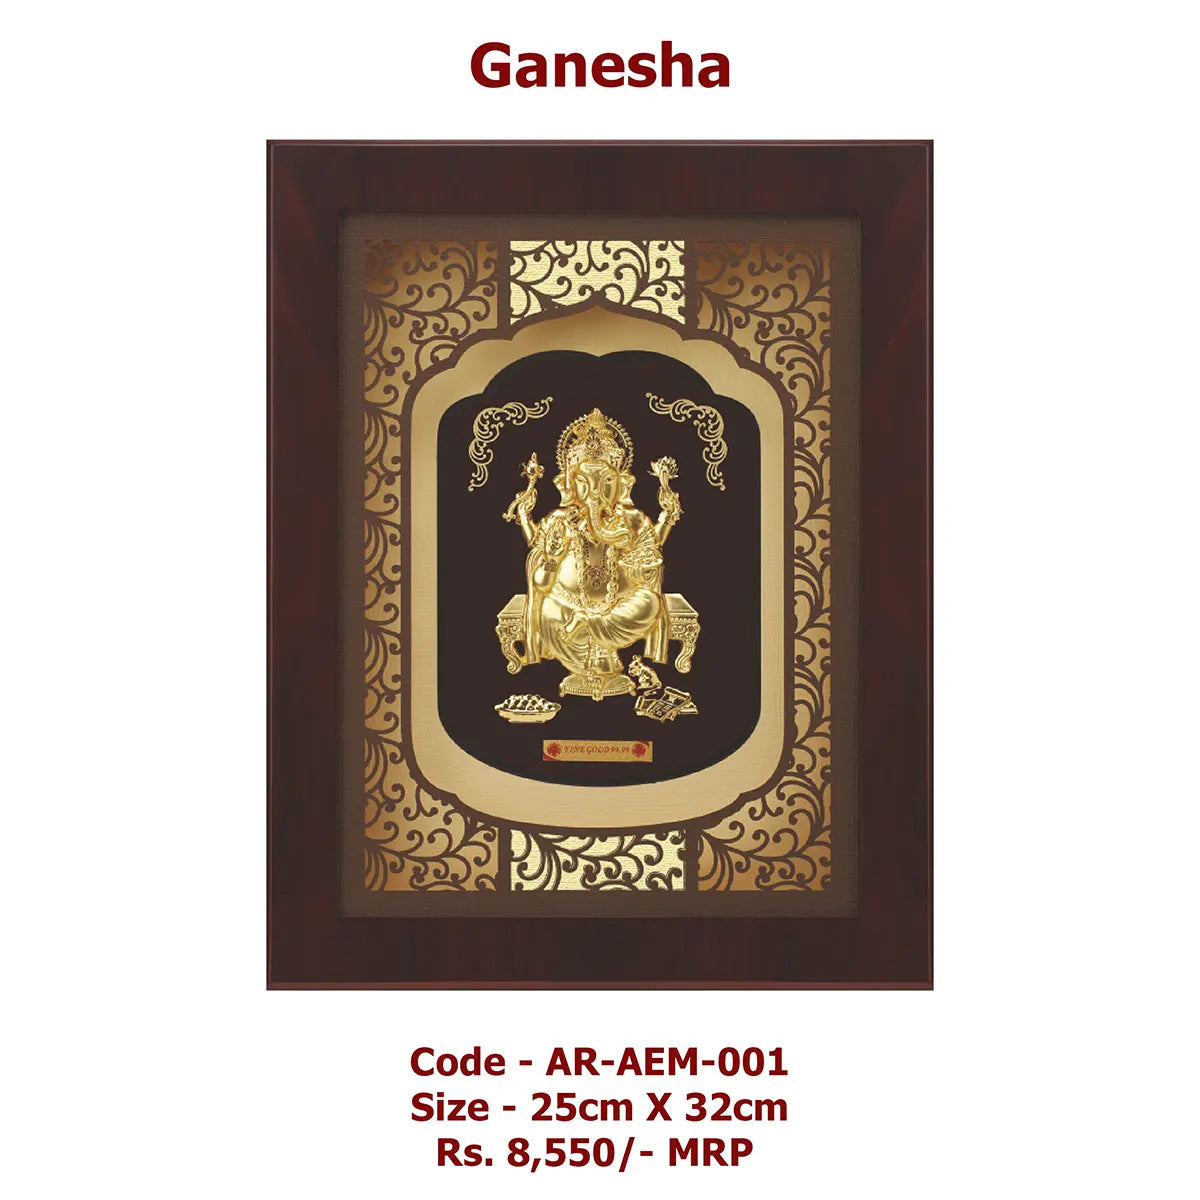 Ganesha Frame 25cm x 32cm size